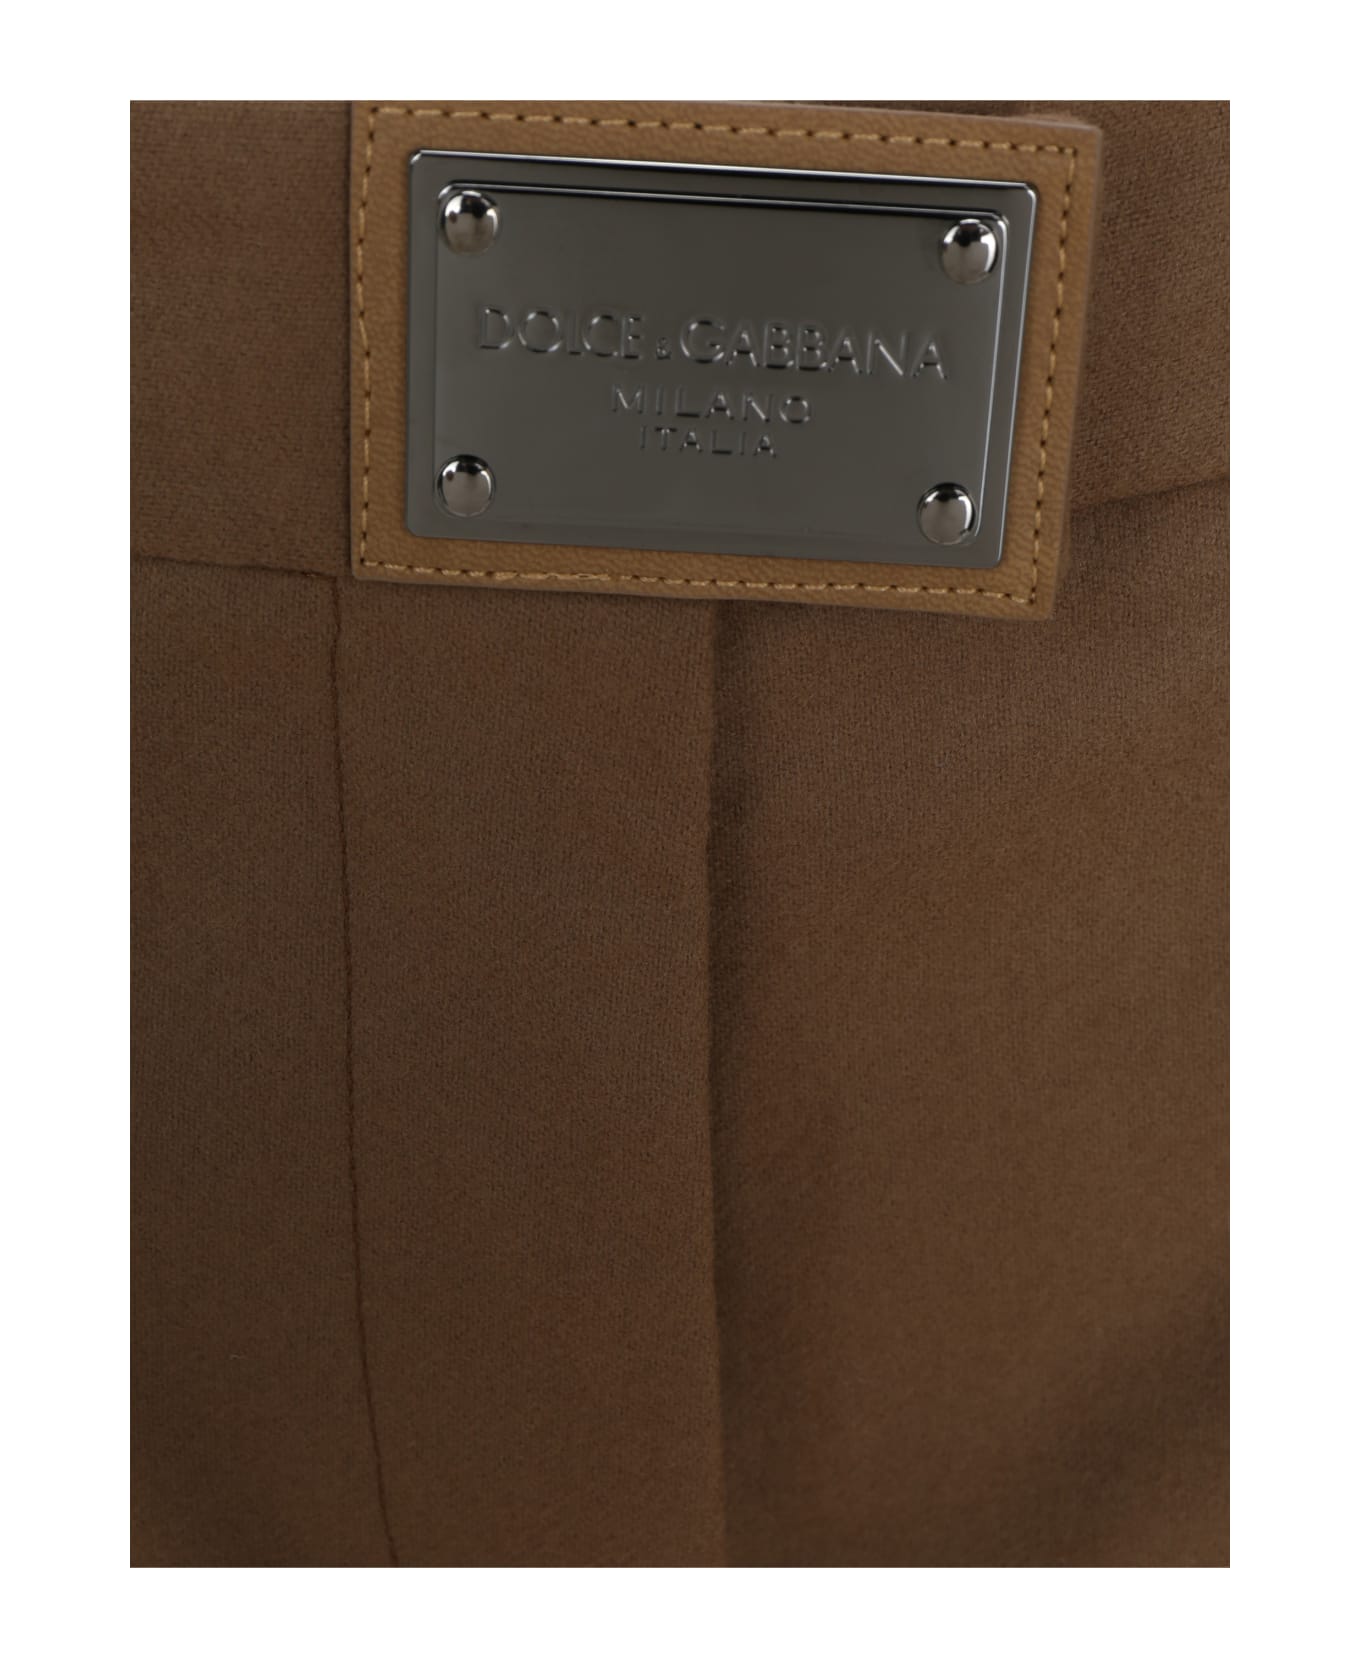 Dolce & Gabbana Straight Pants - Brown